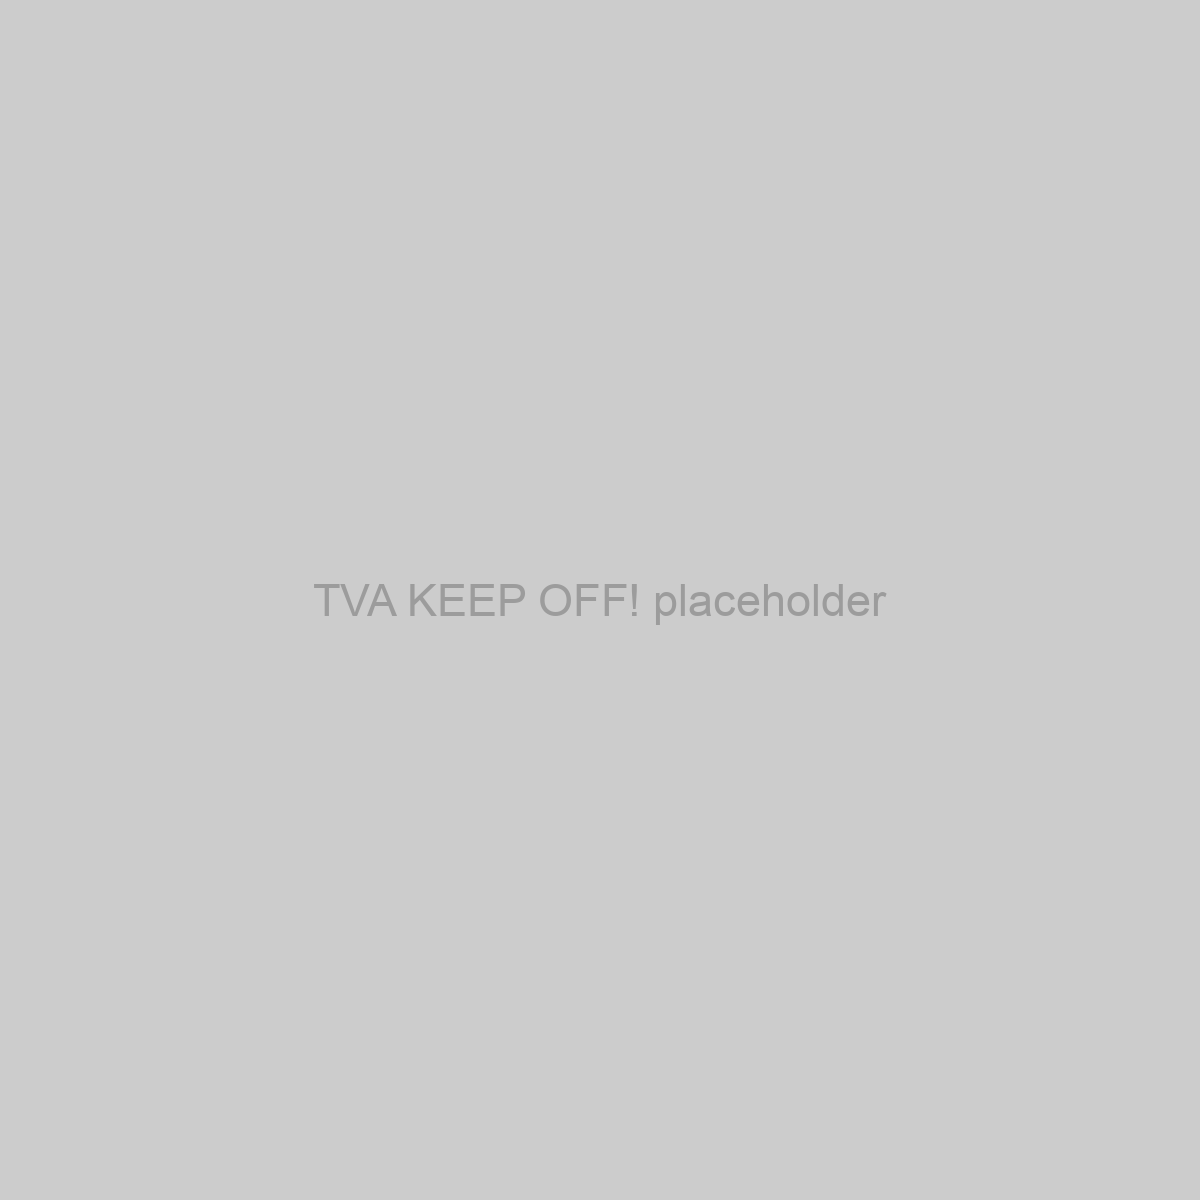 TVA KEEP OFF! Placeholder Image